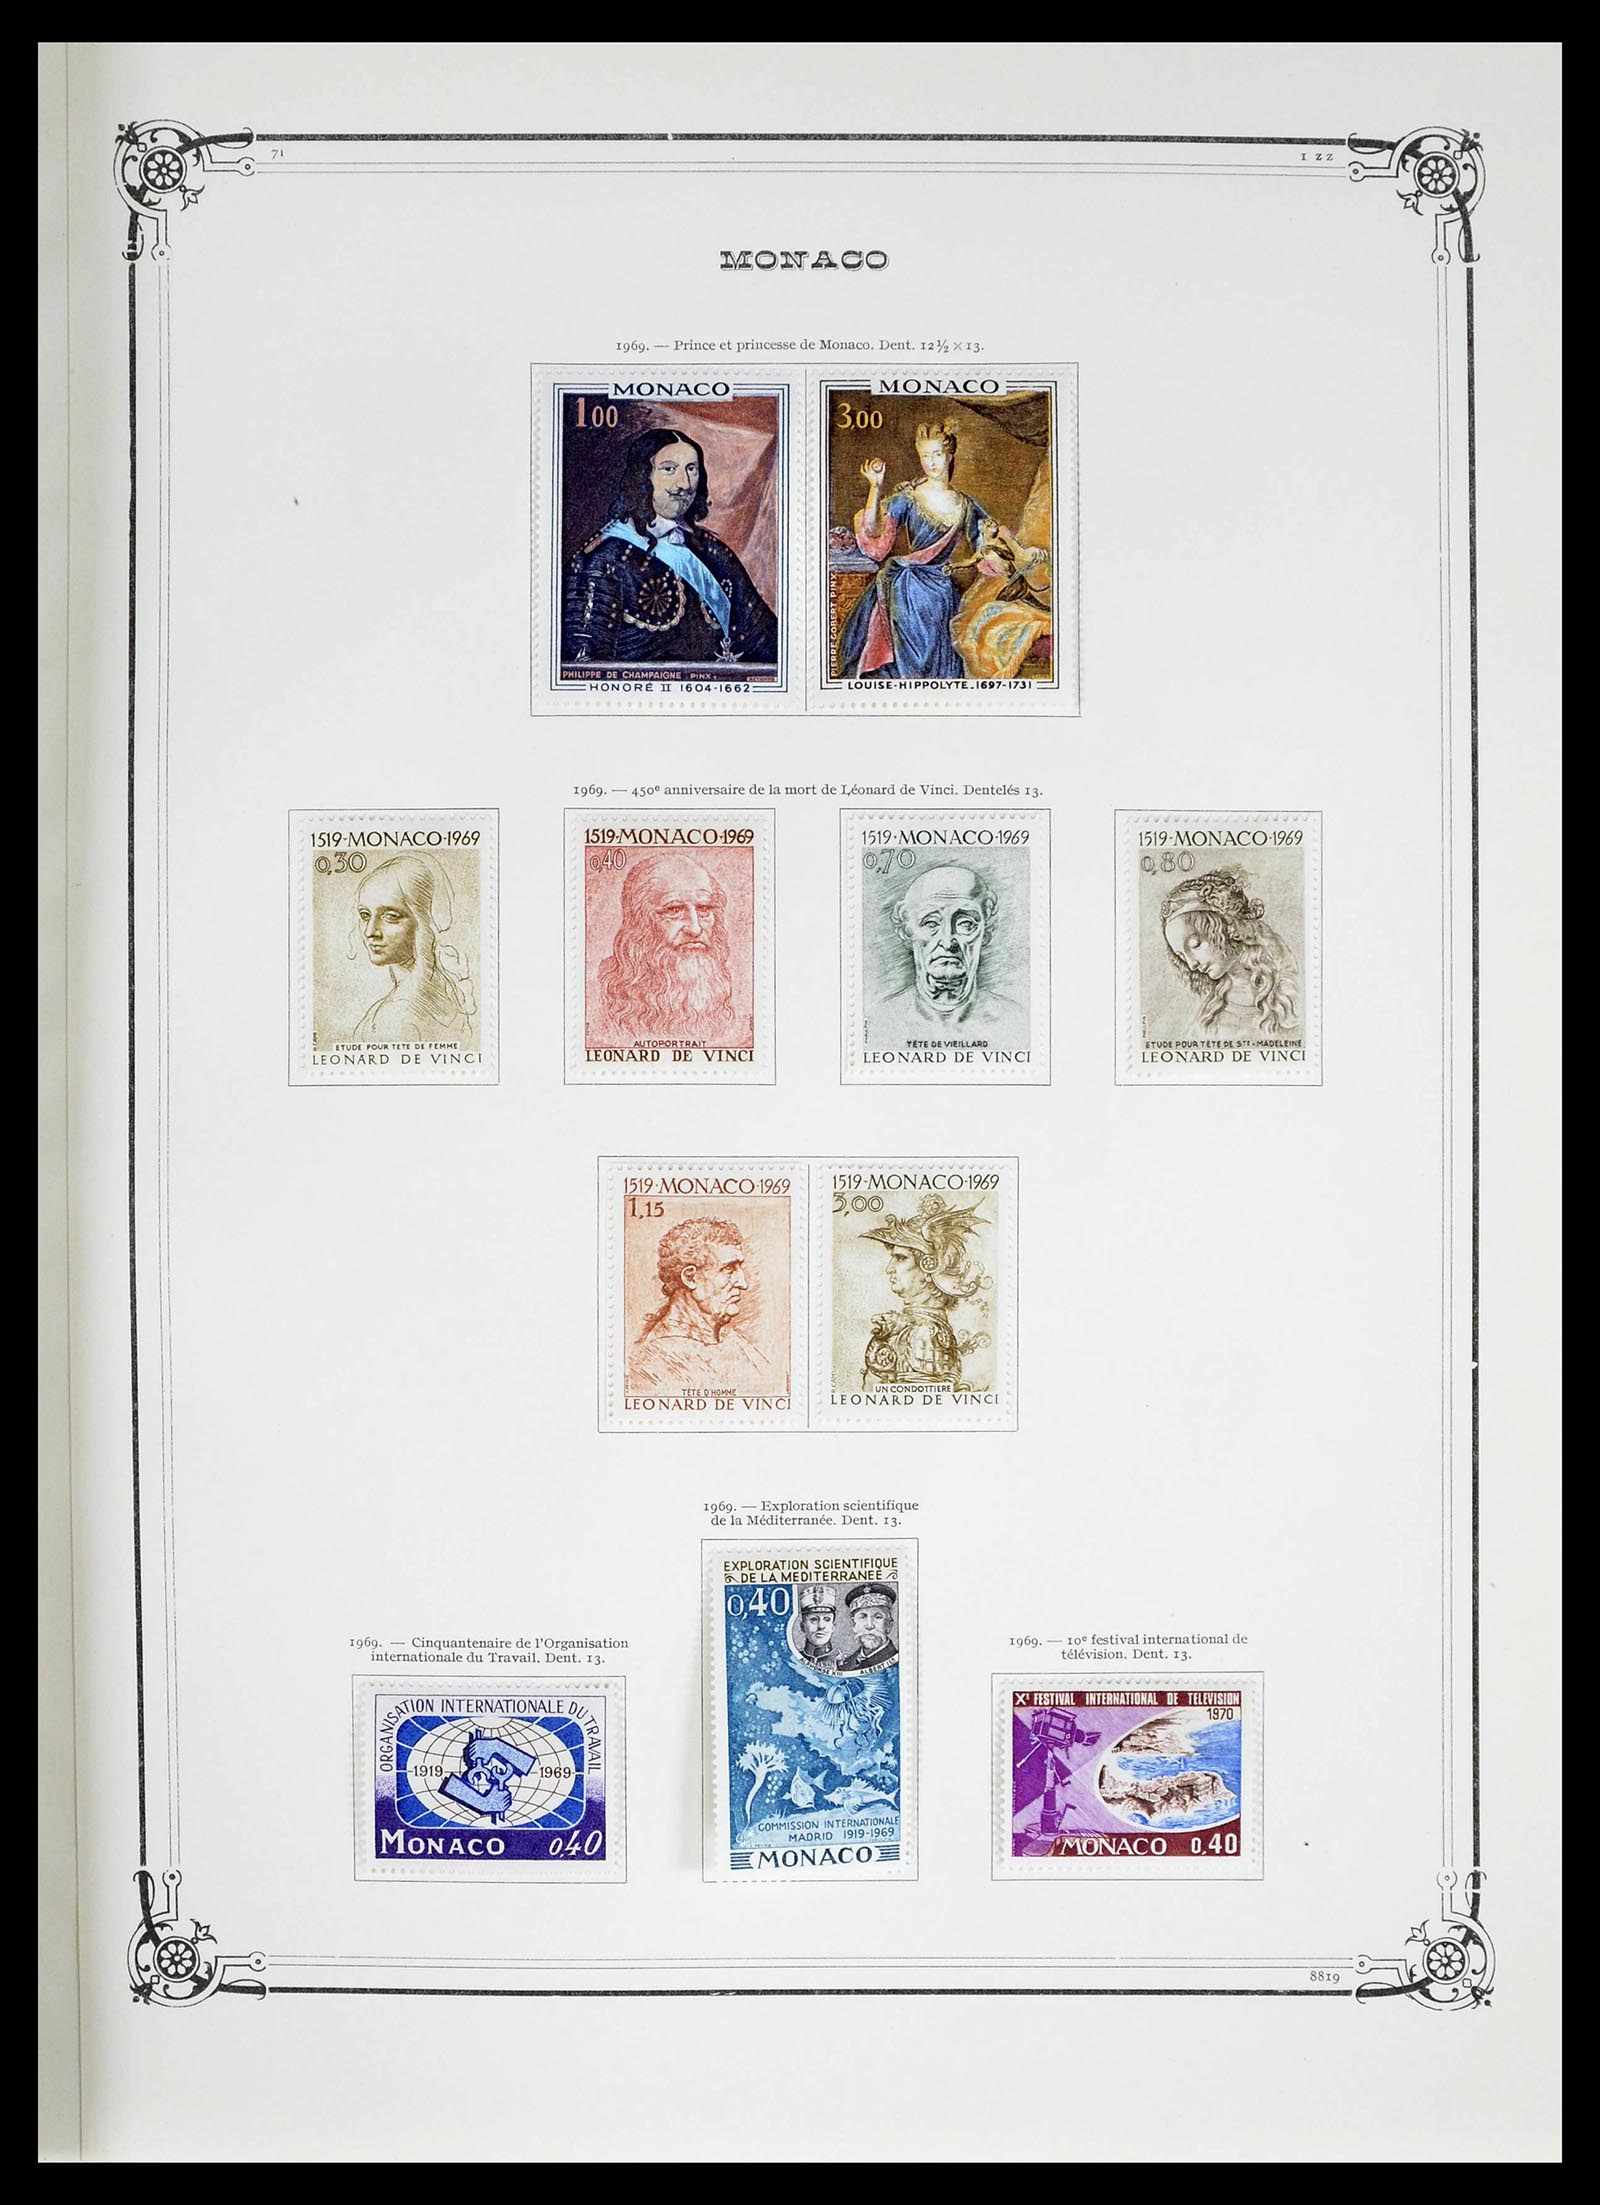 39133 0054 - Stamp collection 39133 Monaco 1885-1996.